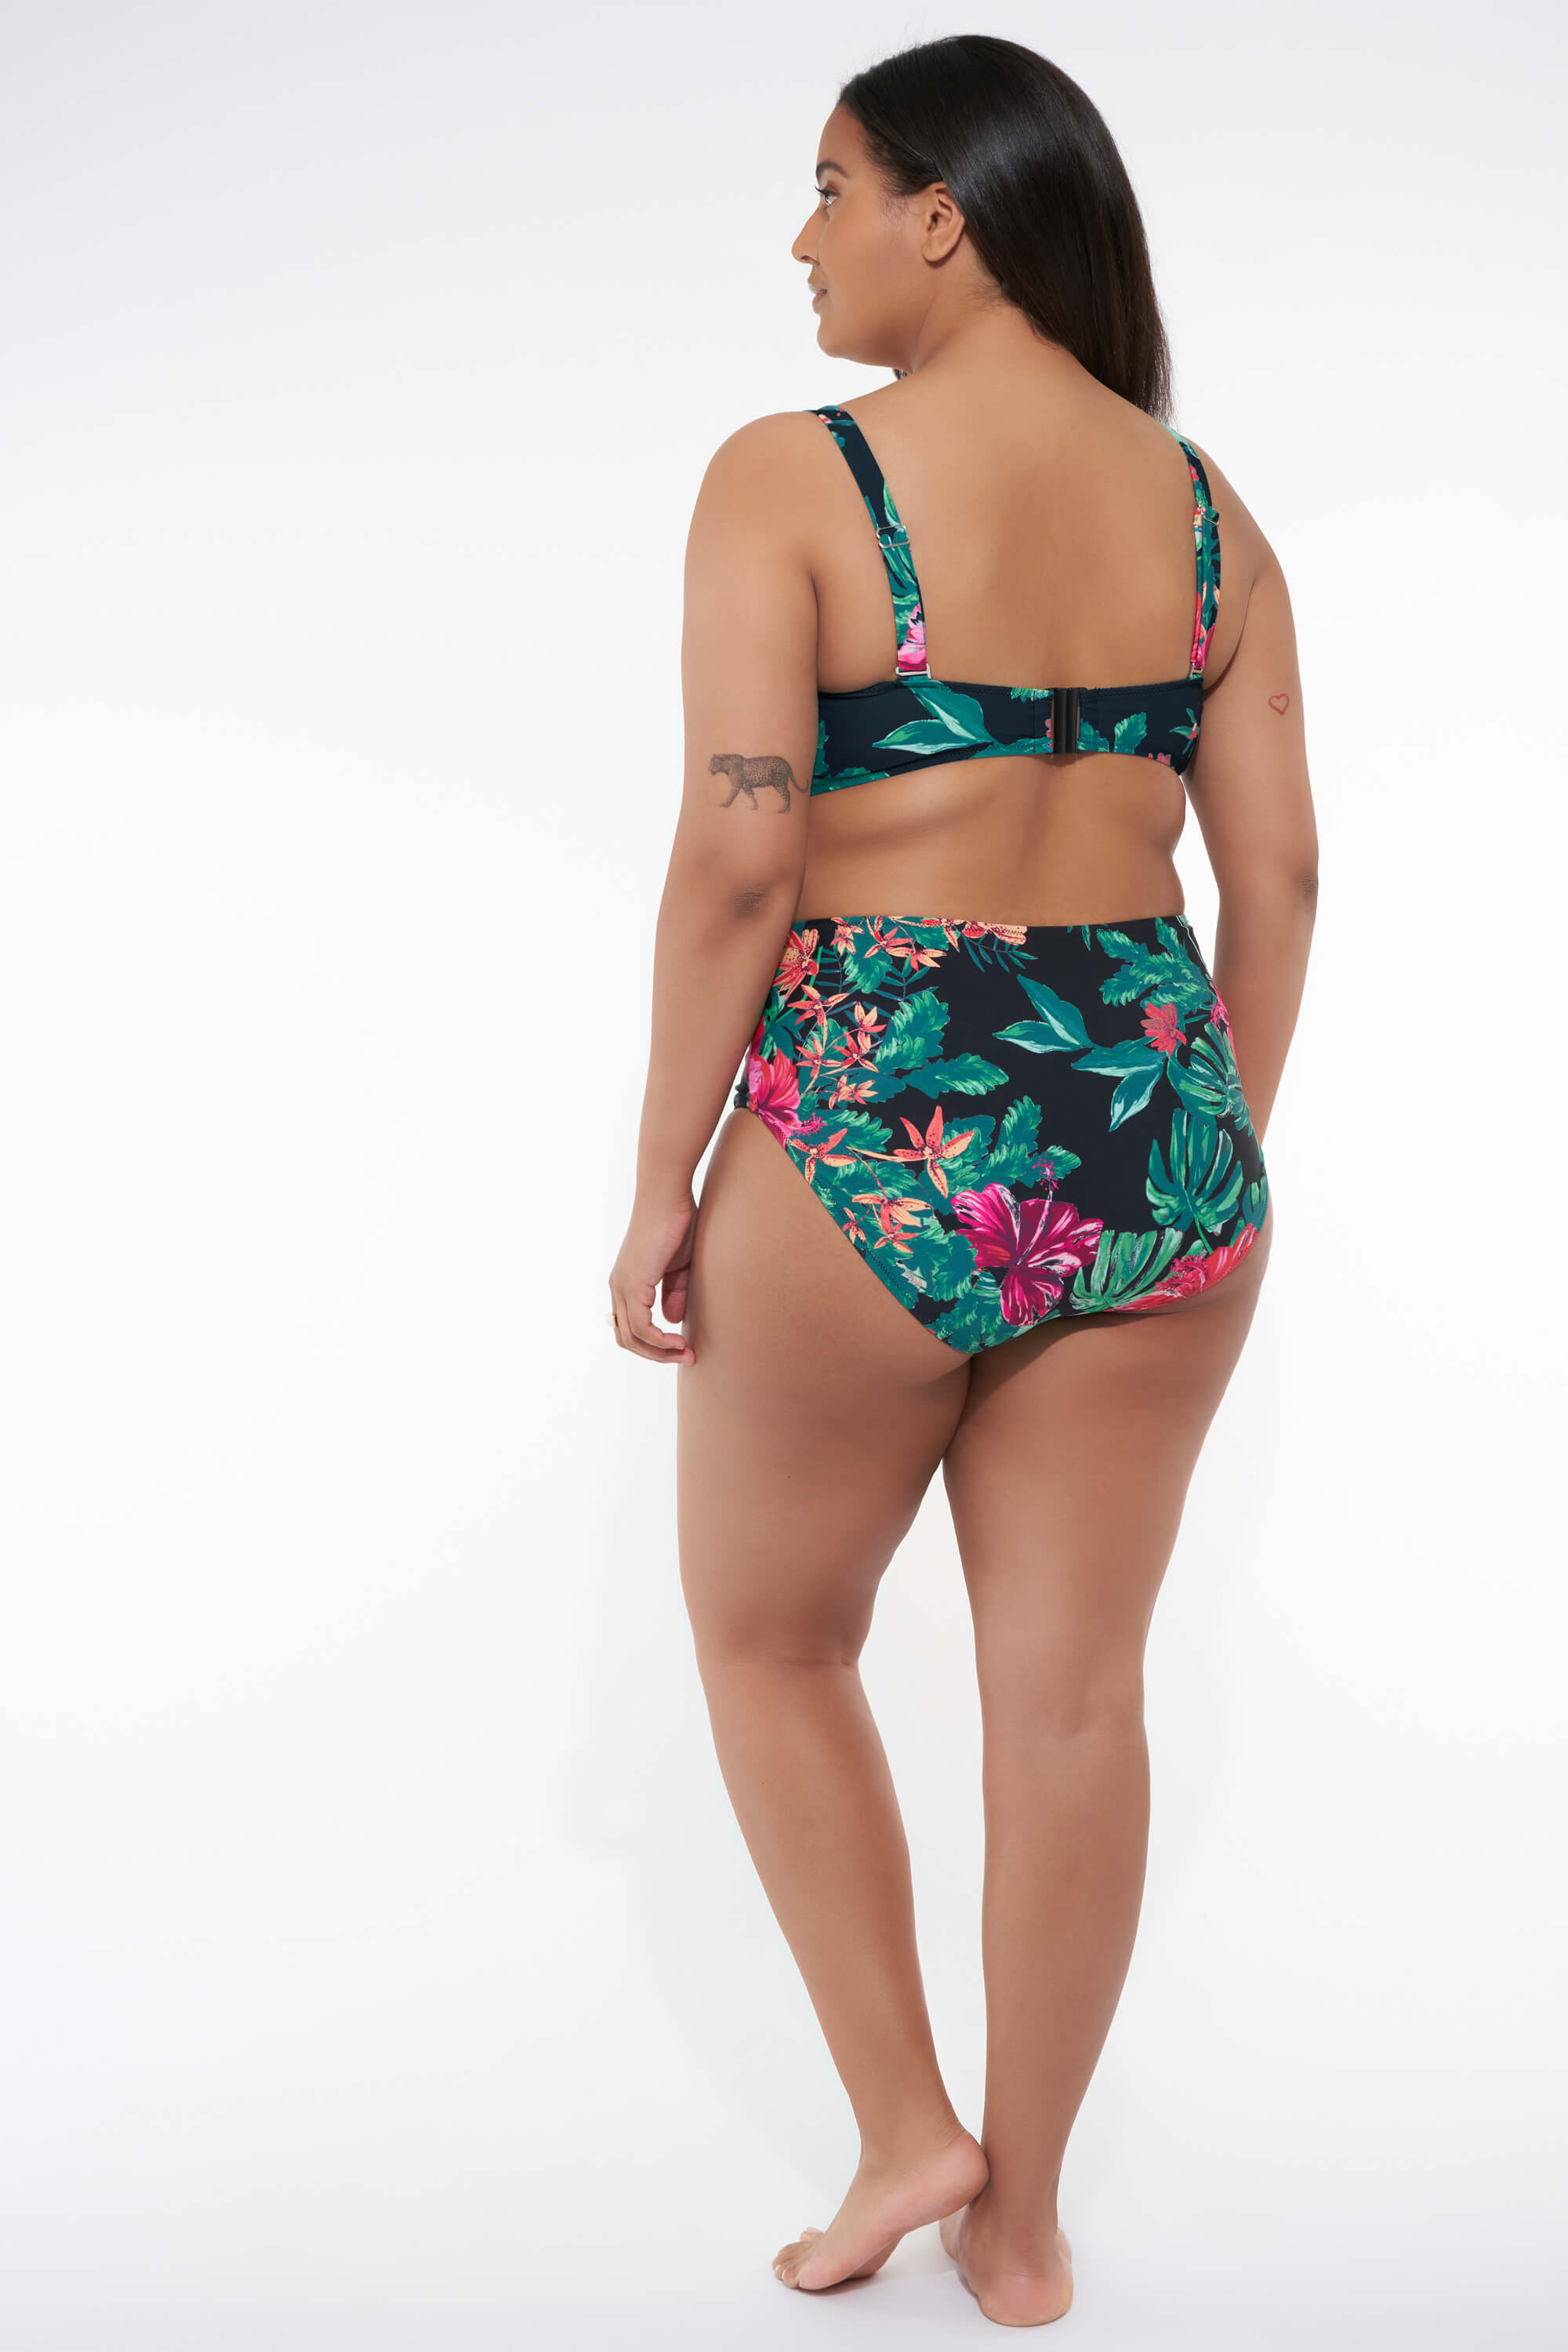 Dames High waisted bikini broekje met print Multi Groen-Khaki bij MS Mode®